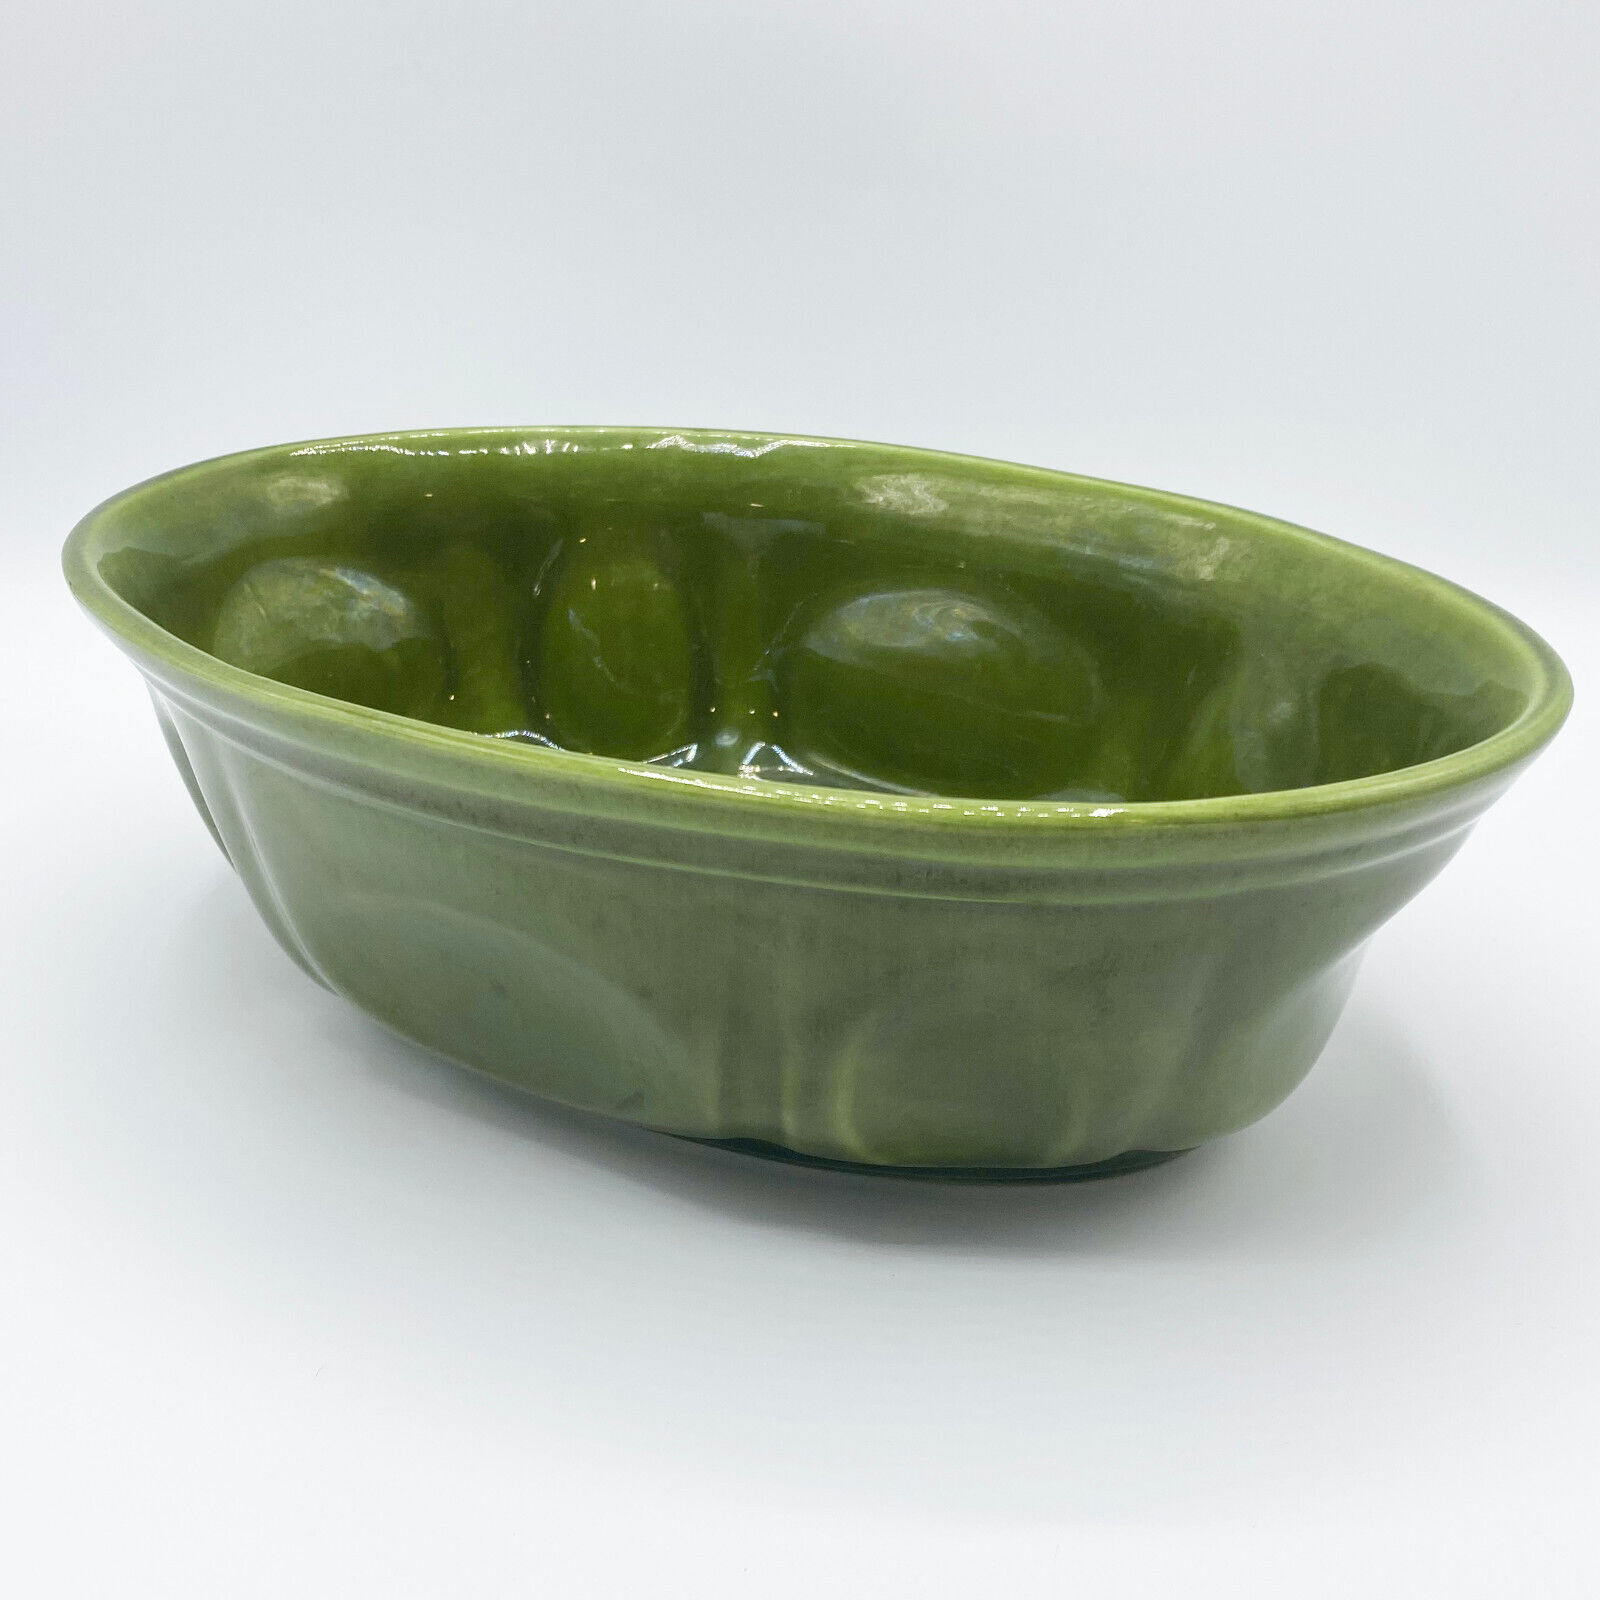 HAEGER Vintage 60s 70s Olive Green Oval Pottery Planter Bowl - No. 3929